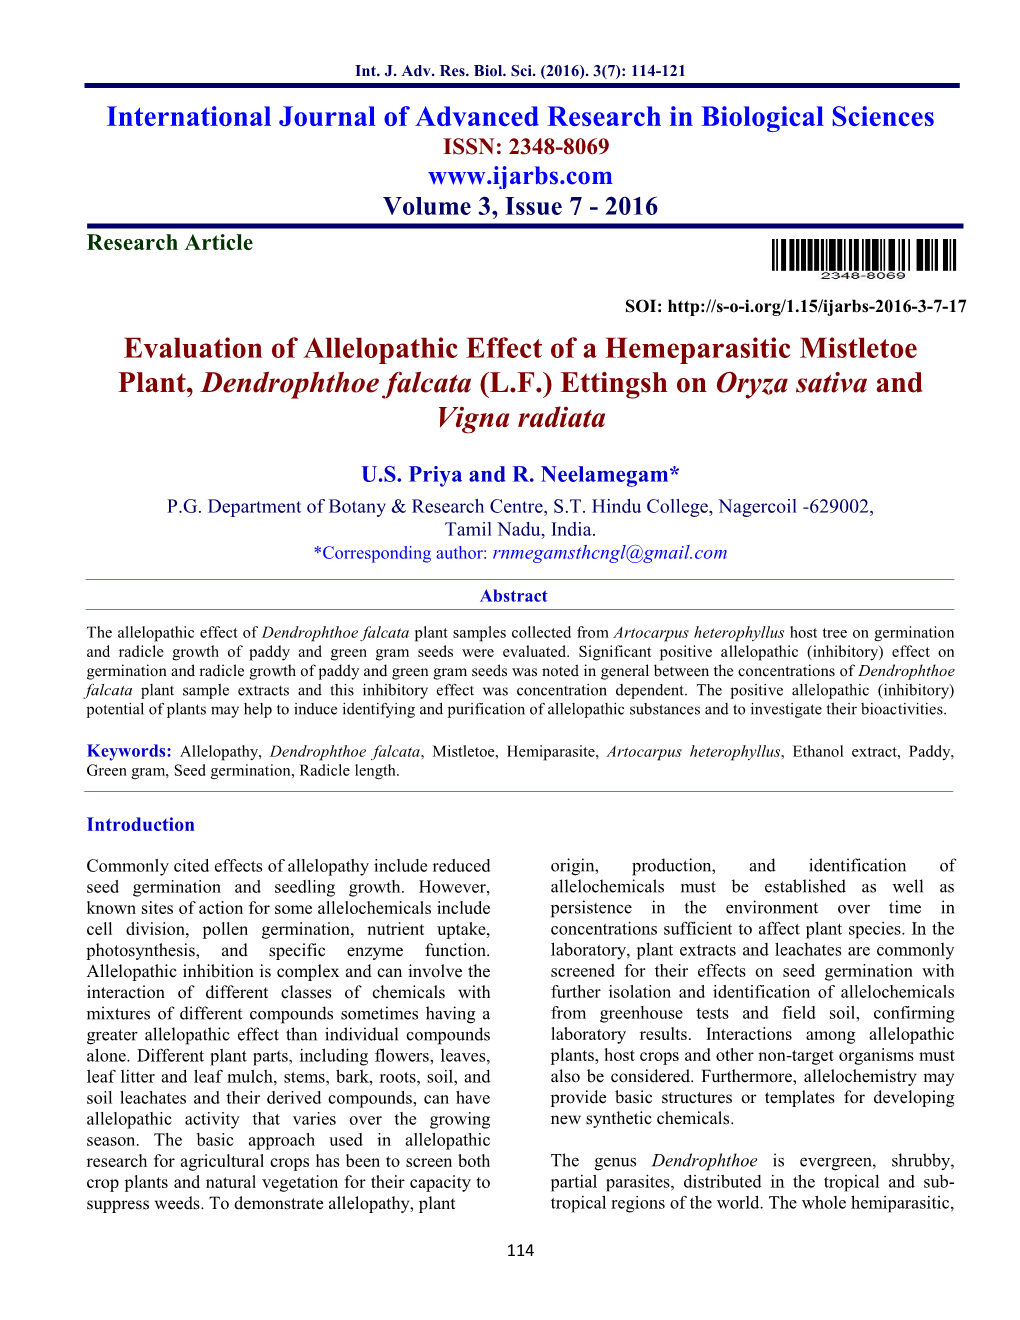 Evaluation of Allelopathic Effect of a Hemeparasitic Mistletoe Plant, Dendrophthoe Falcata (L.F.) Ettingsh on Oryza Sativa and Vigna Radiata